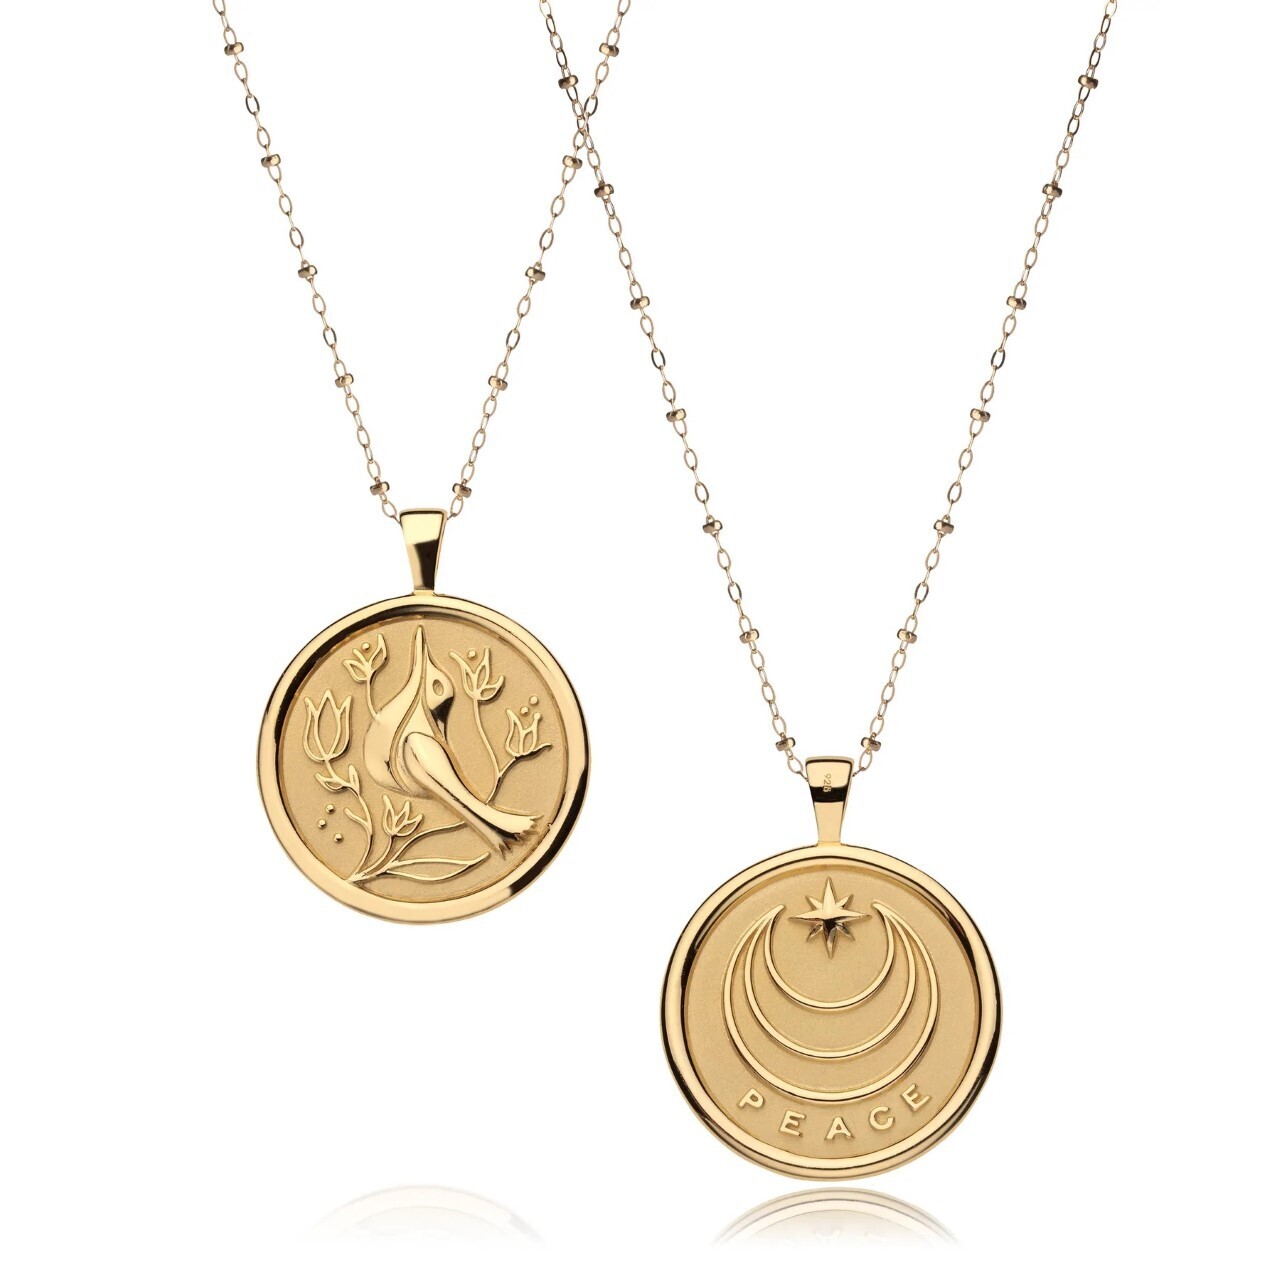 Jane Win Original PEACE Coin Pendant with Satellite Chain